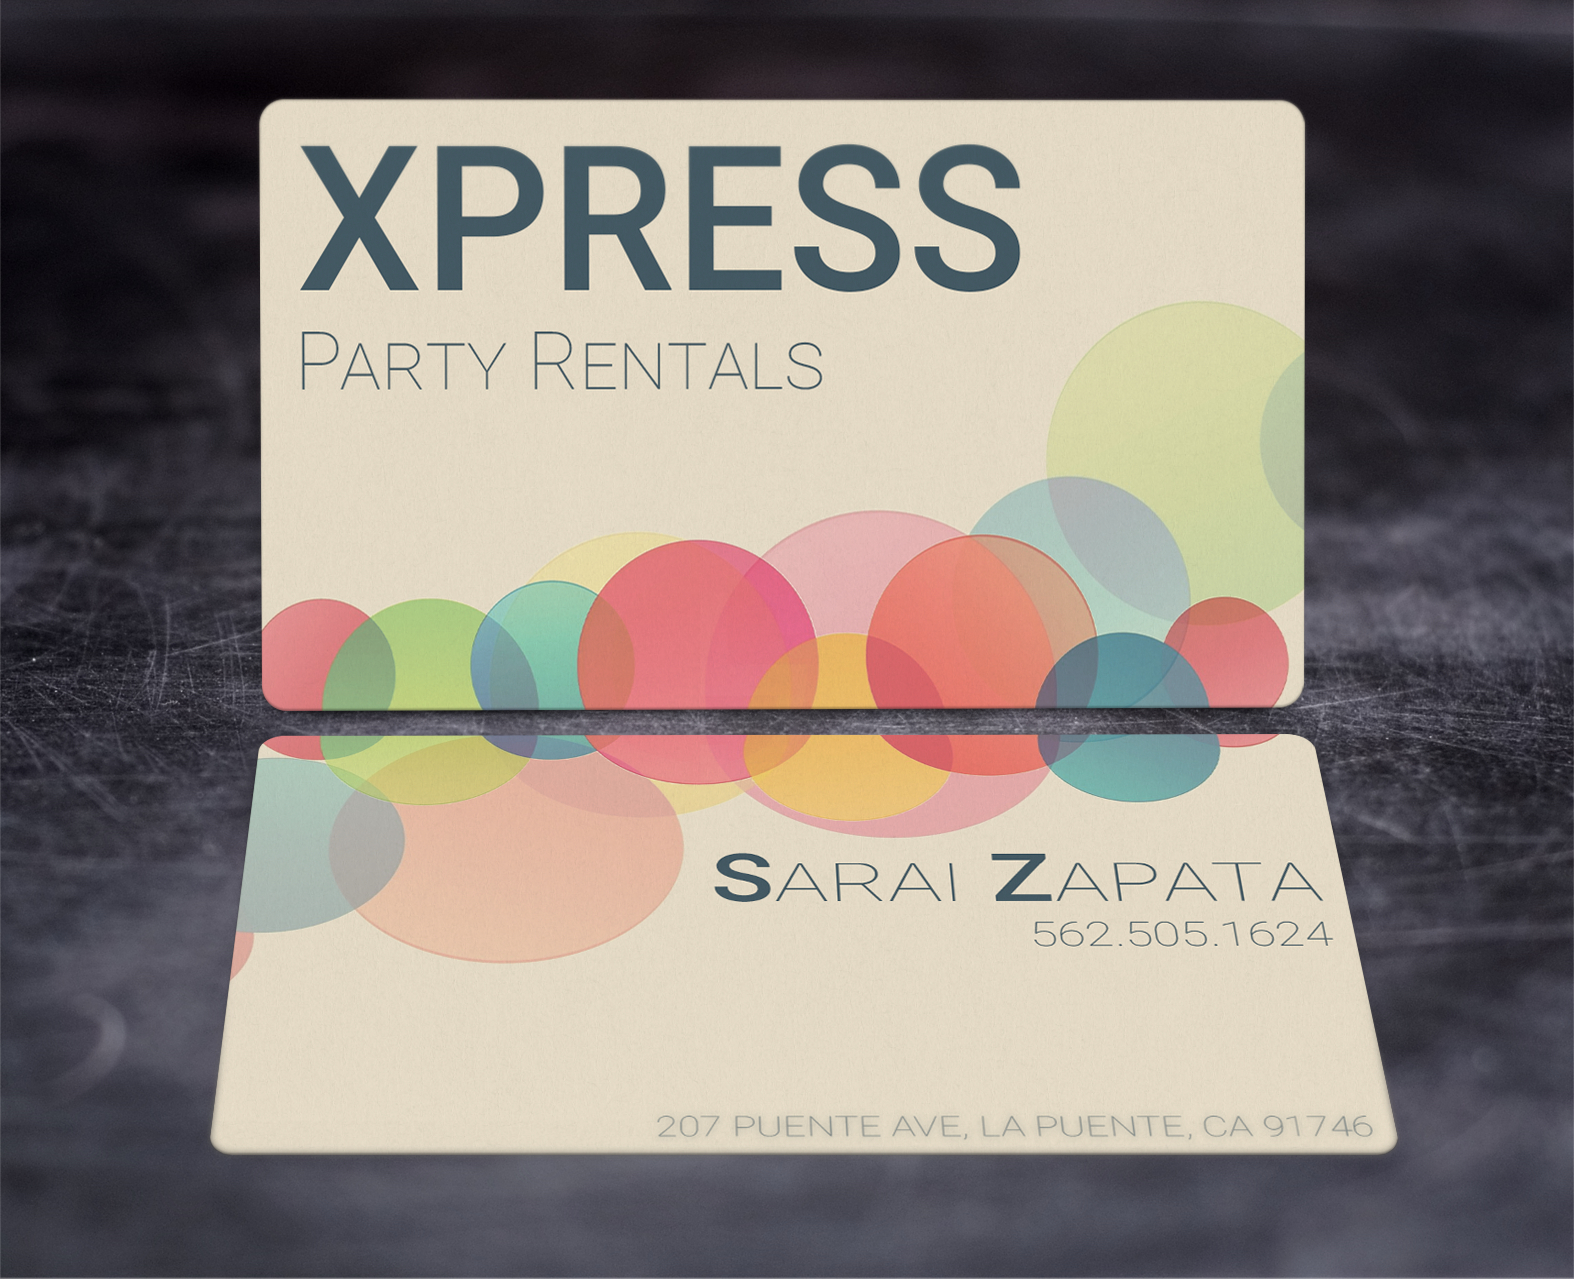 Xpress Party Rentals - Business Card Design